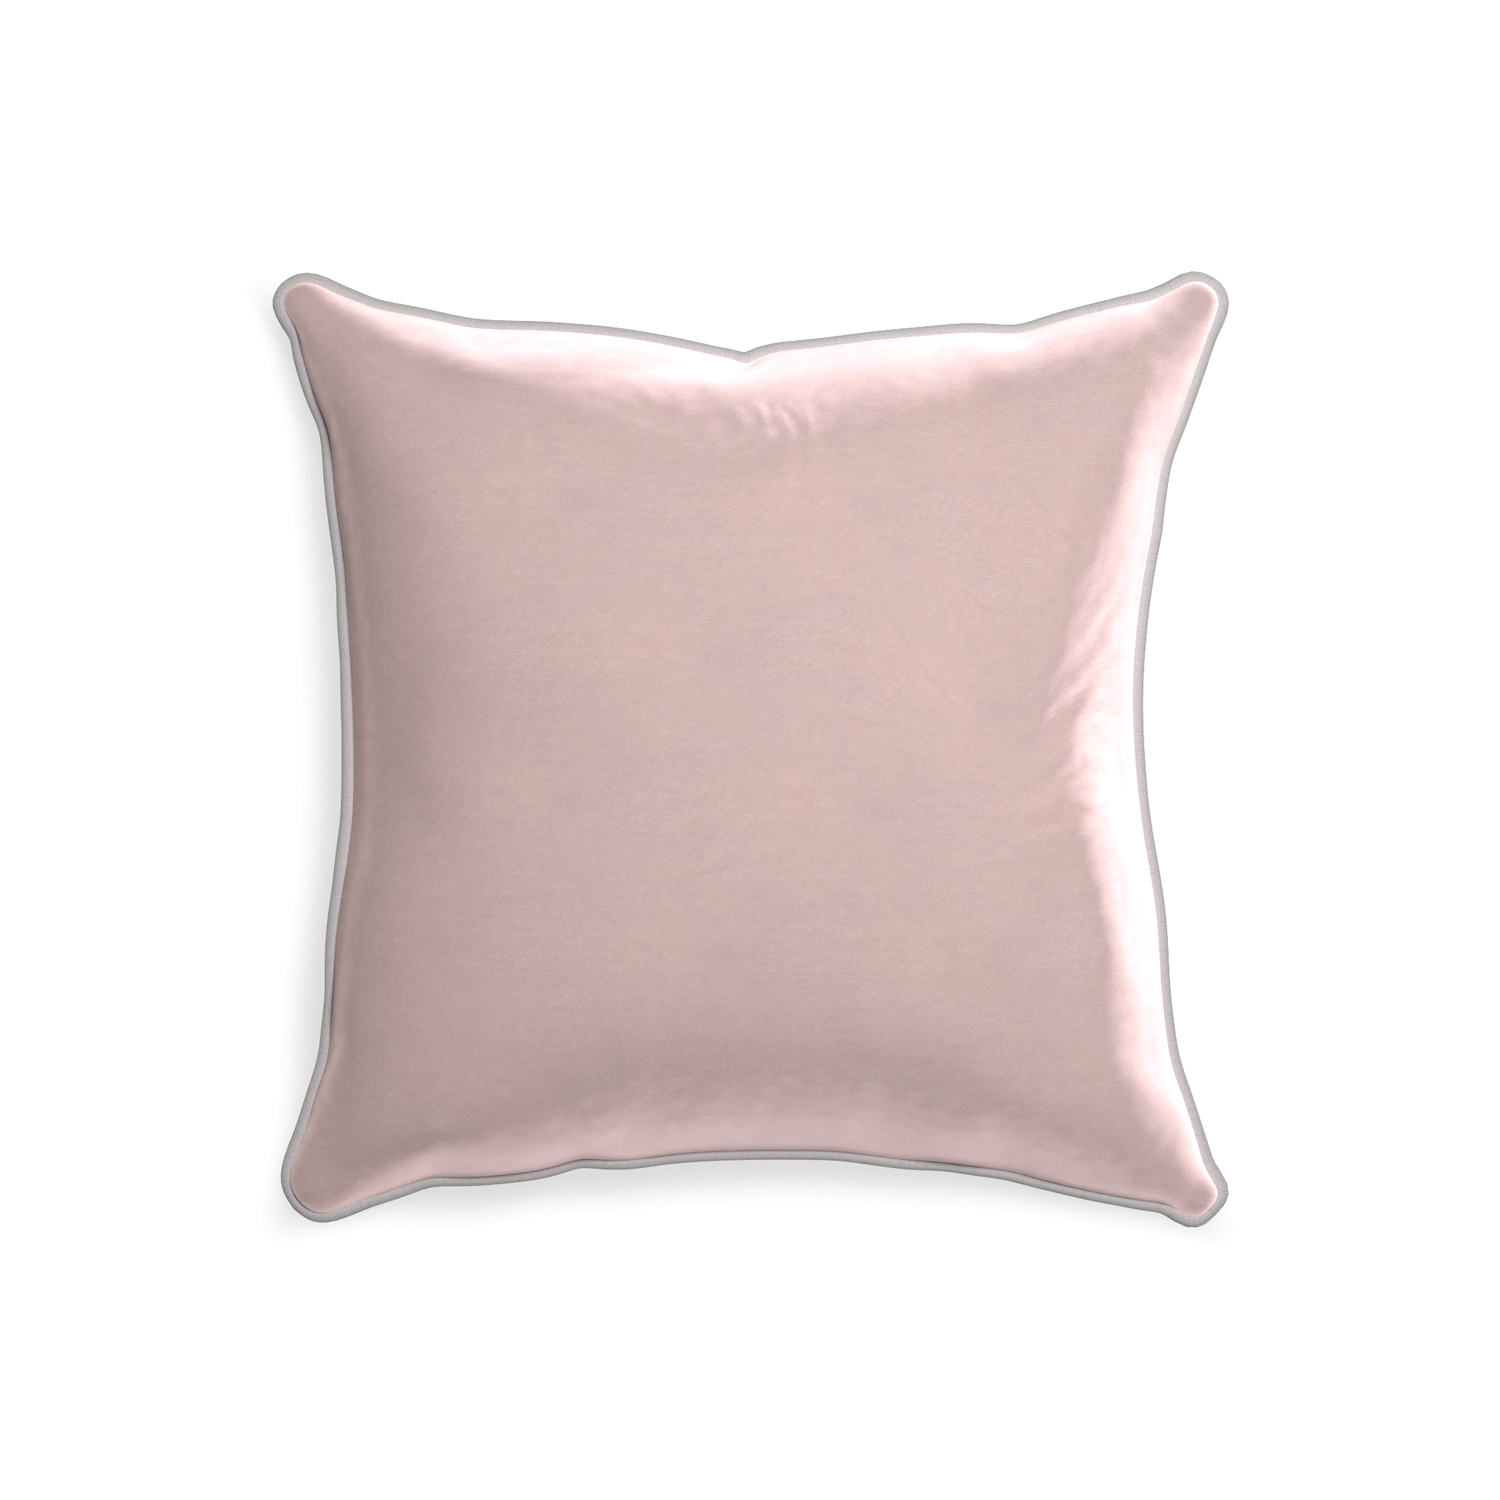 20-square rose velvet custom pillow with pebble piping on white background